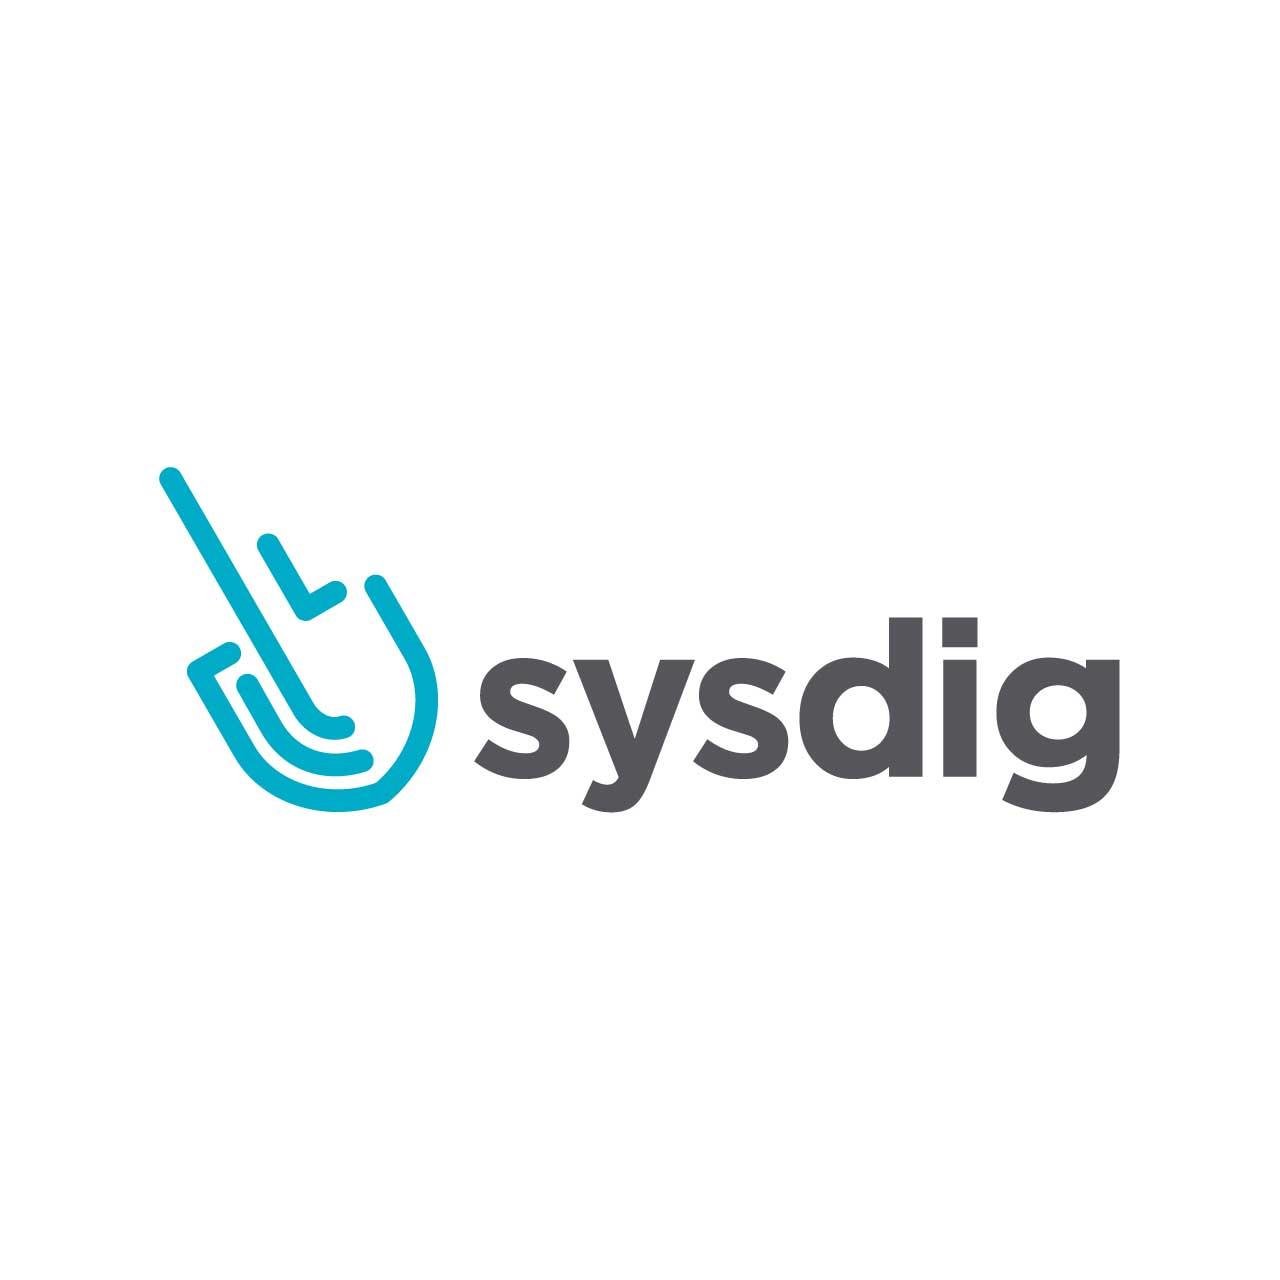 Sysdigの最新情報 - 2021年1月